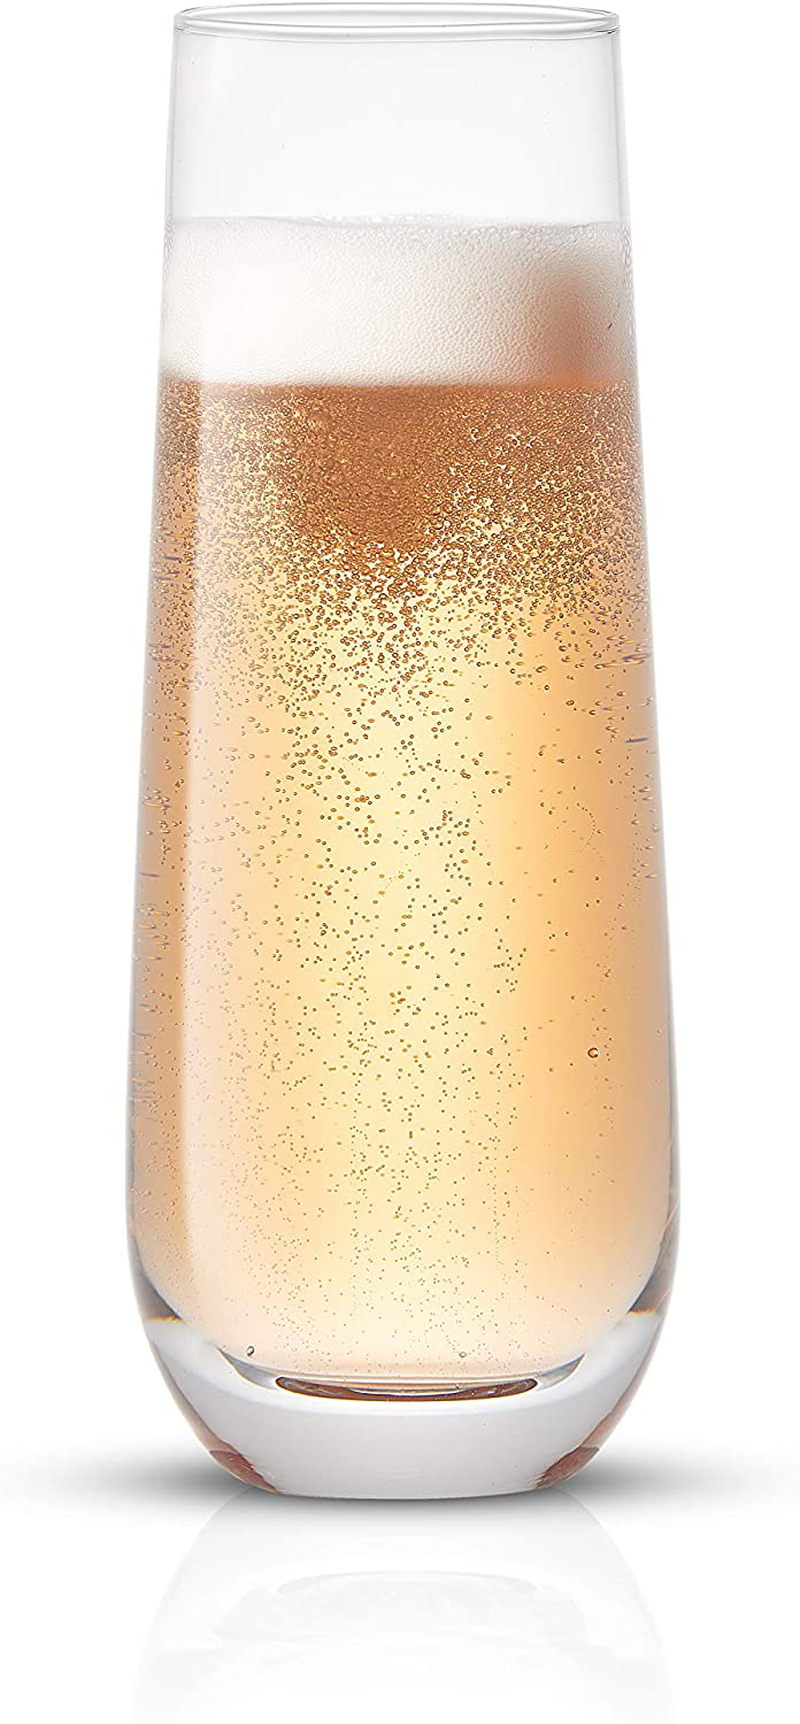 Joyjolt Milo Stemless Champagne Flutes Set of 8 Crystal Glasses. 9.4Oz Champagne Glasses. Prosecco Wine Flute, Mimosa Glasses Set, Cocktail Glass Set, Water Glasses, Highball Glass, Bar Glassware